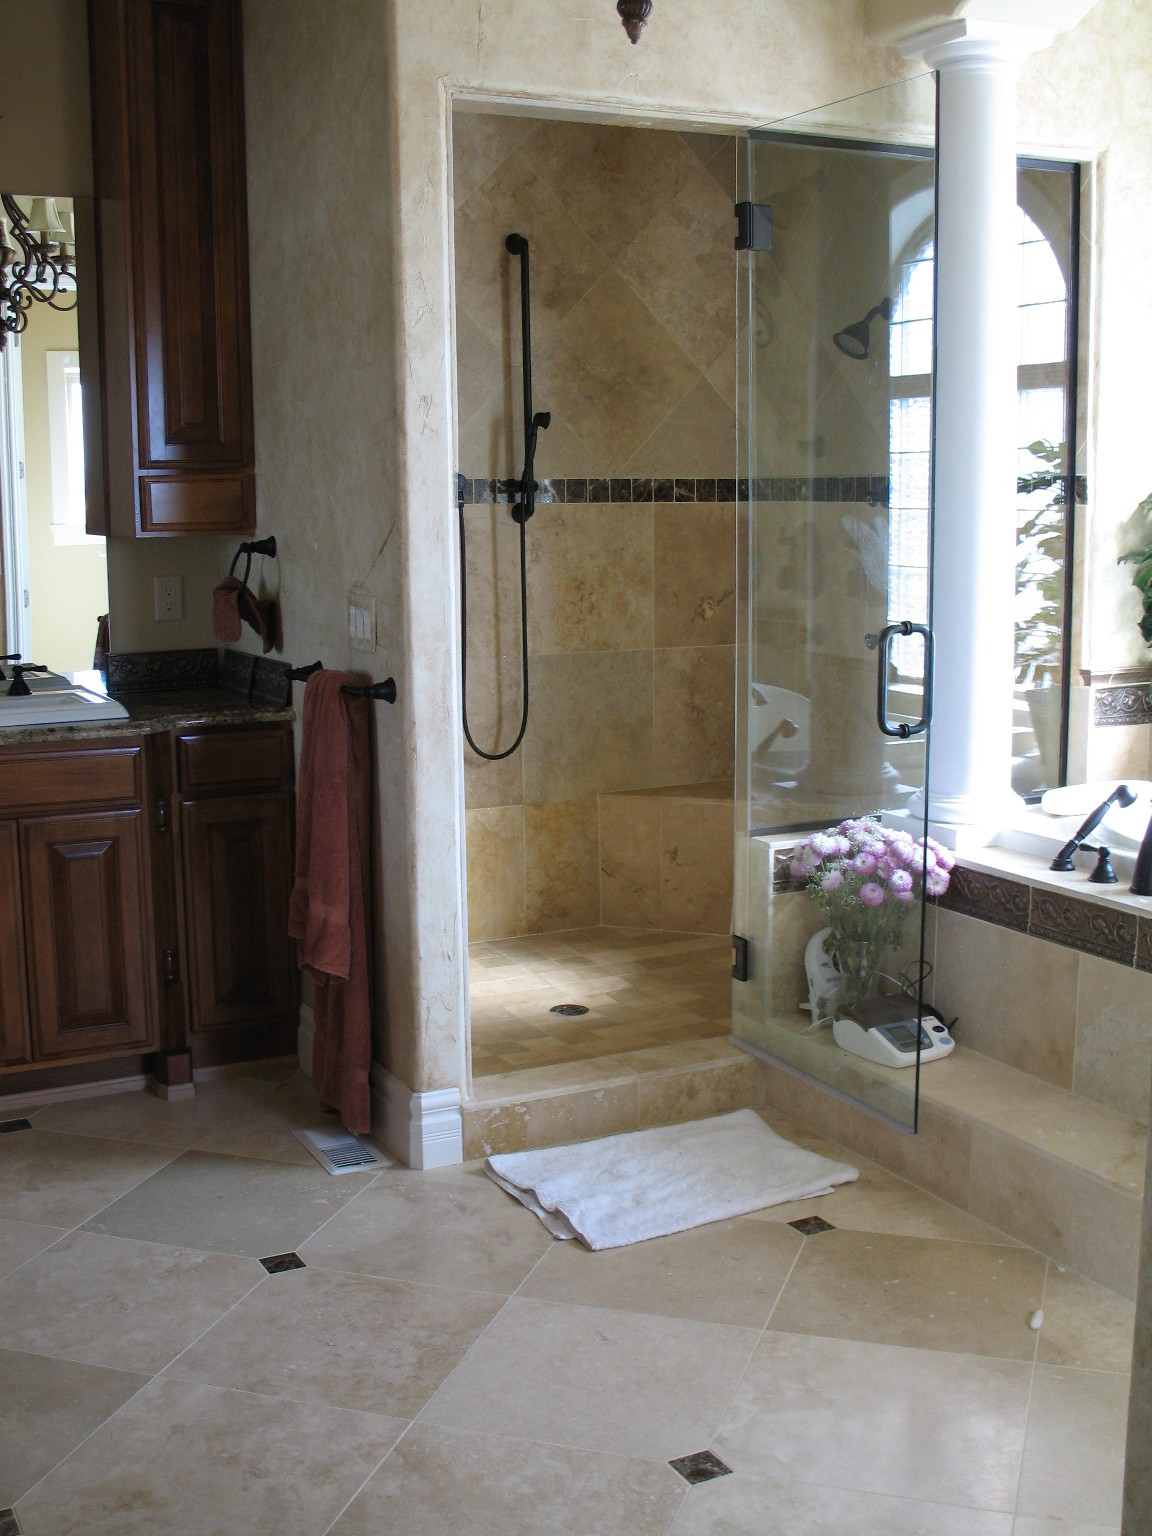 Bathroom Shower Floor Tile
 Earth and Wood Creations Bathroom Tile Gallery